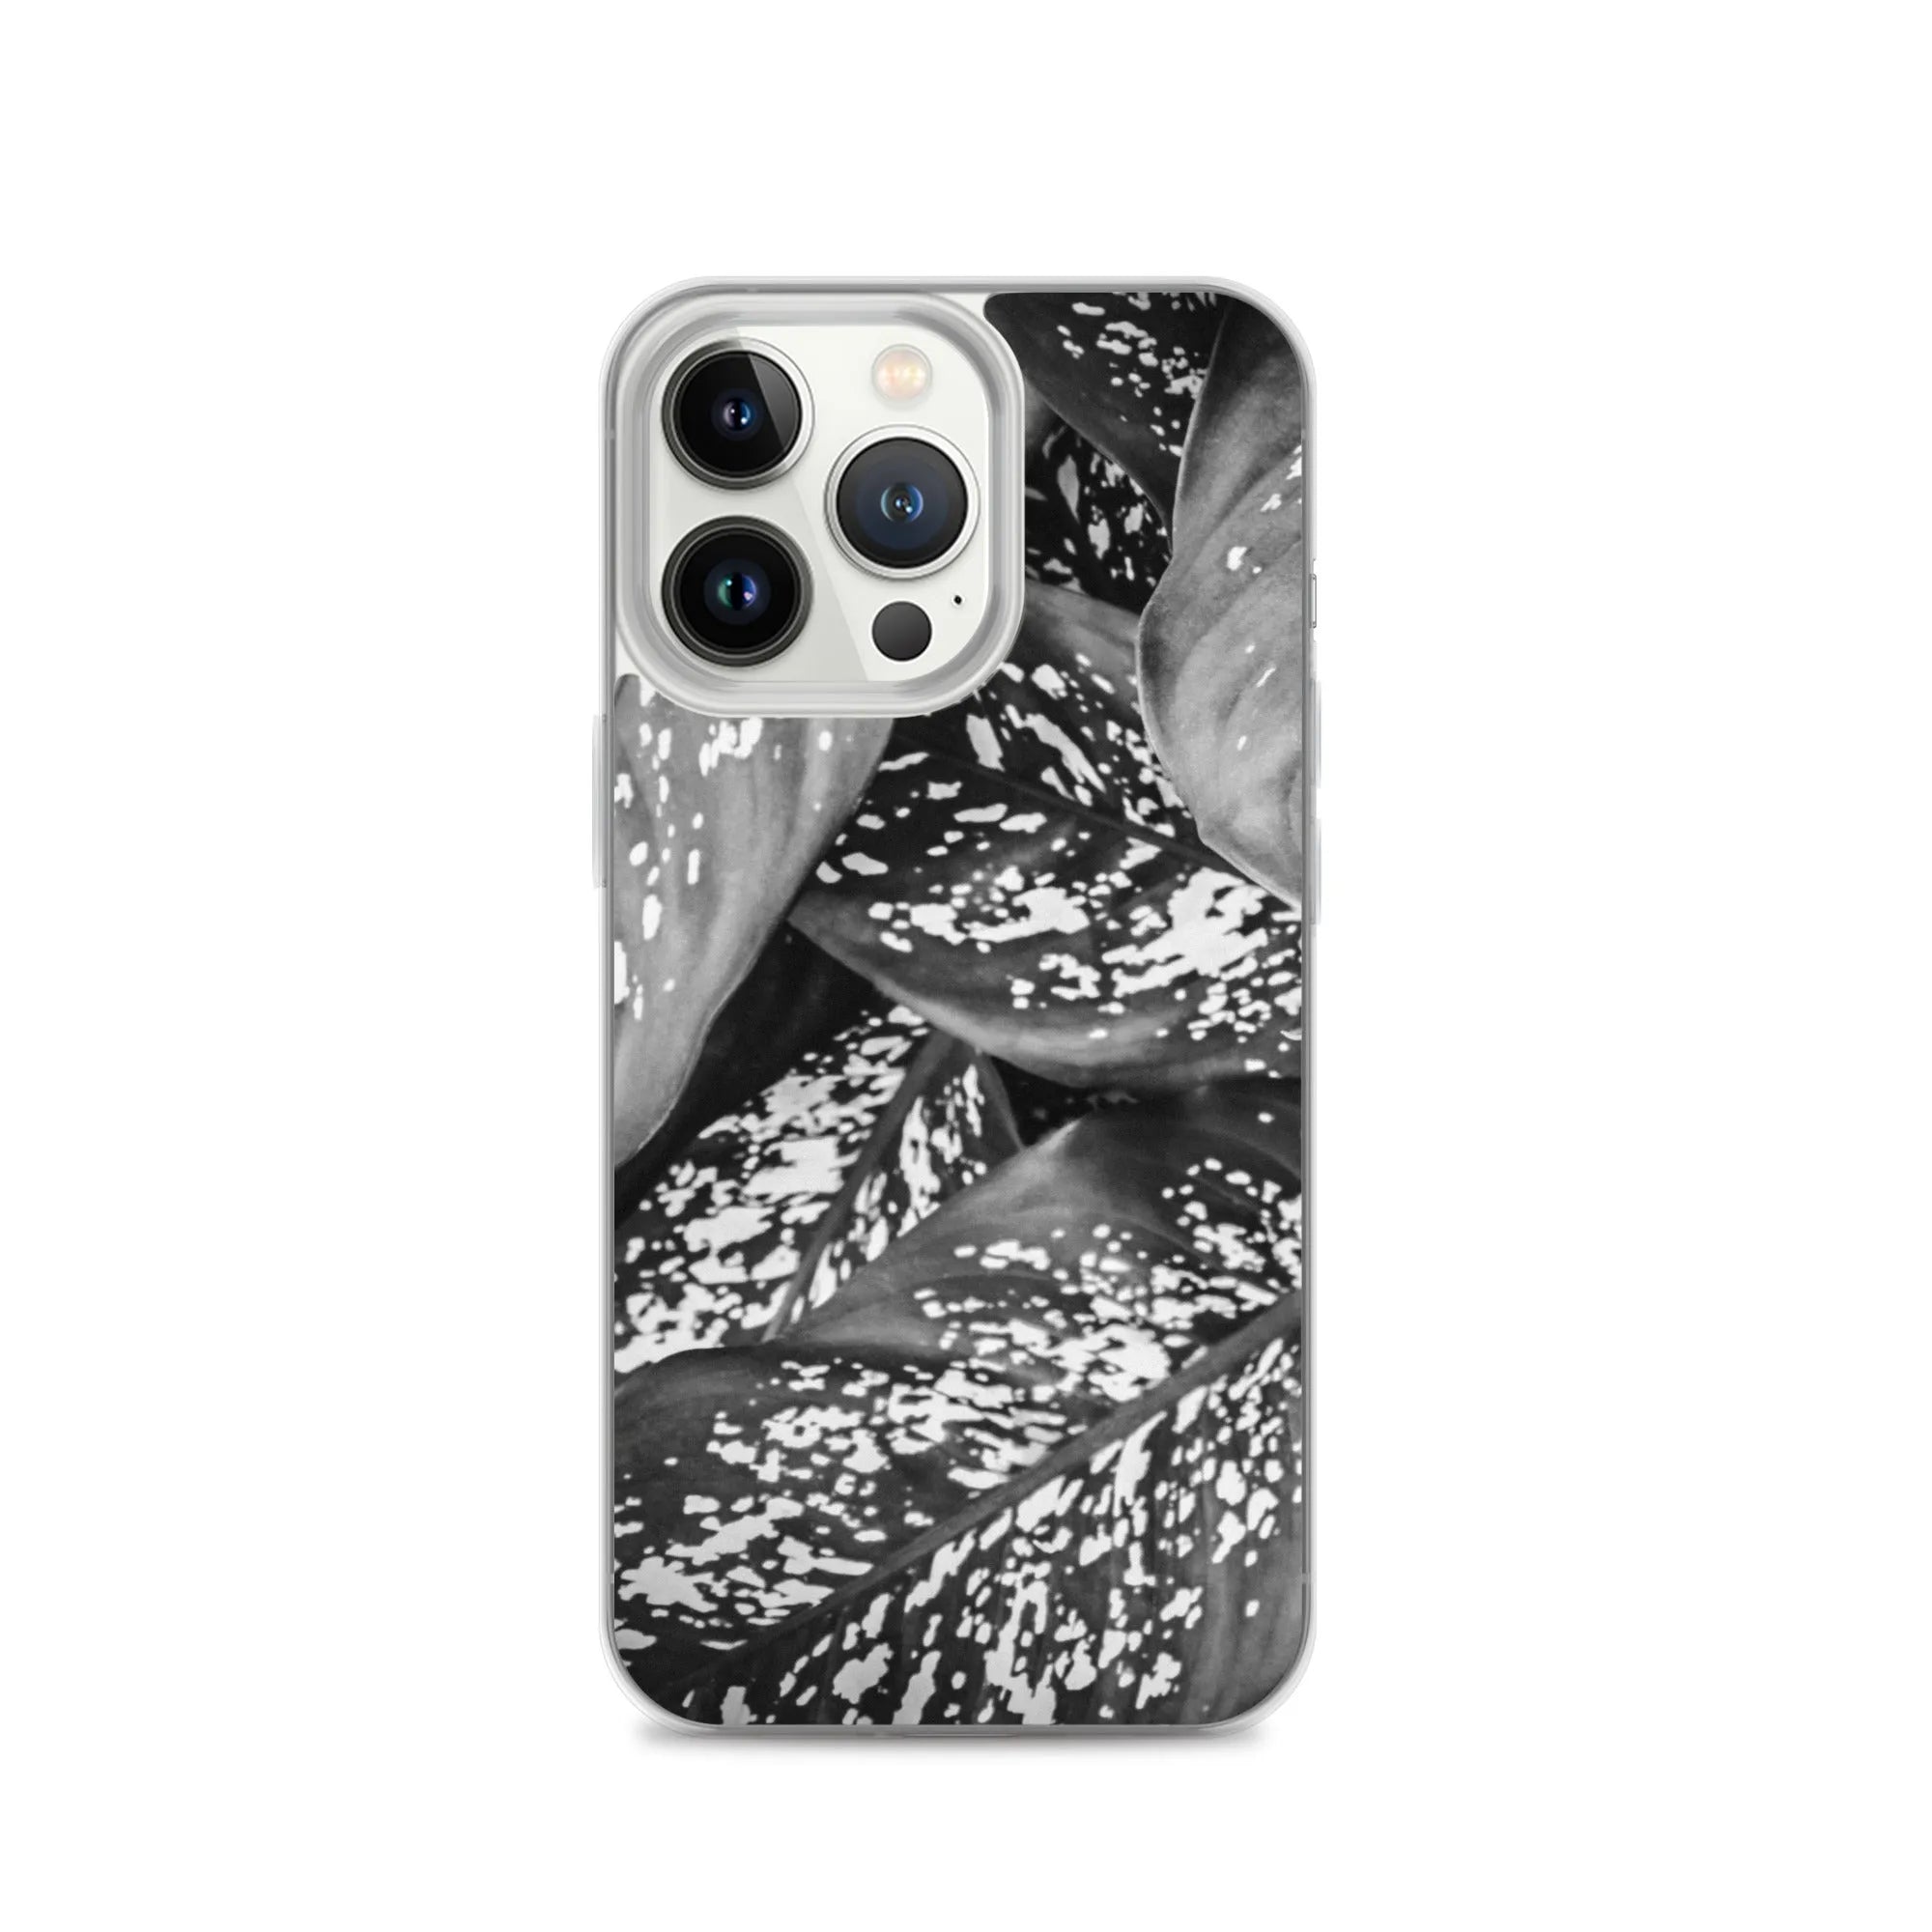 Pitter Splatter Botanical Art Iphone Case - Black And White - Iphone 13 Pro - Mobile Phone Cases - Aesthetic Art